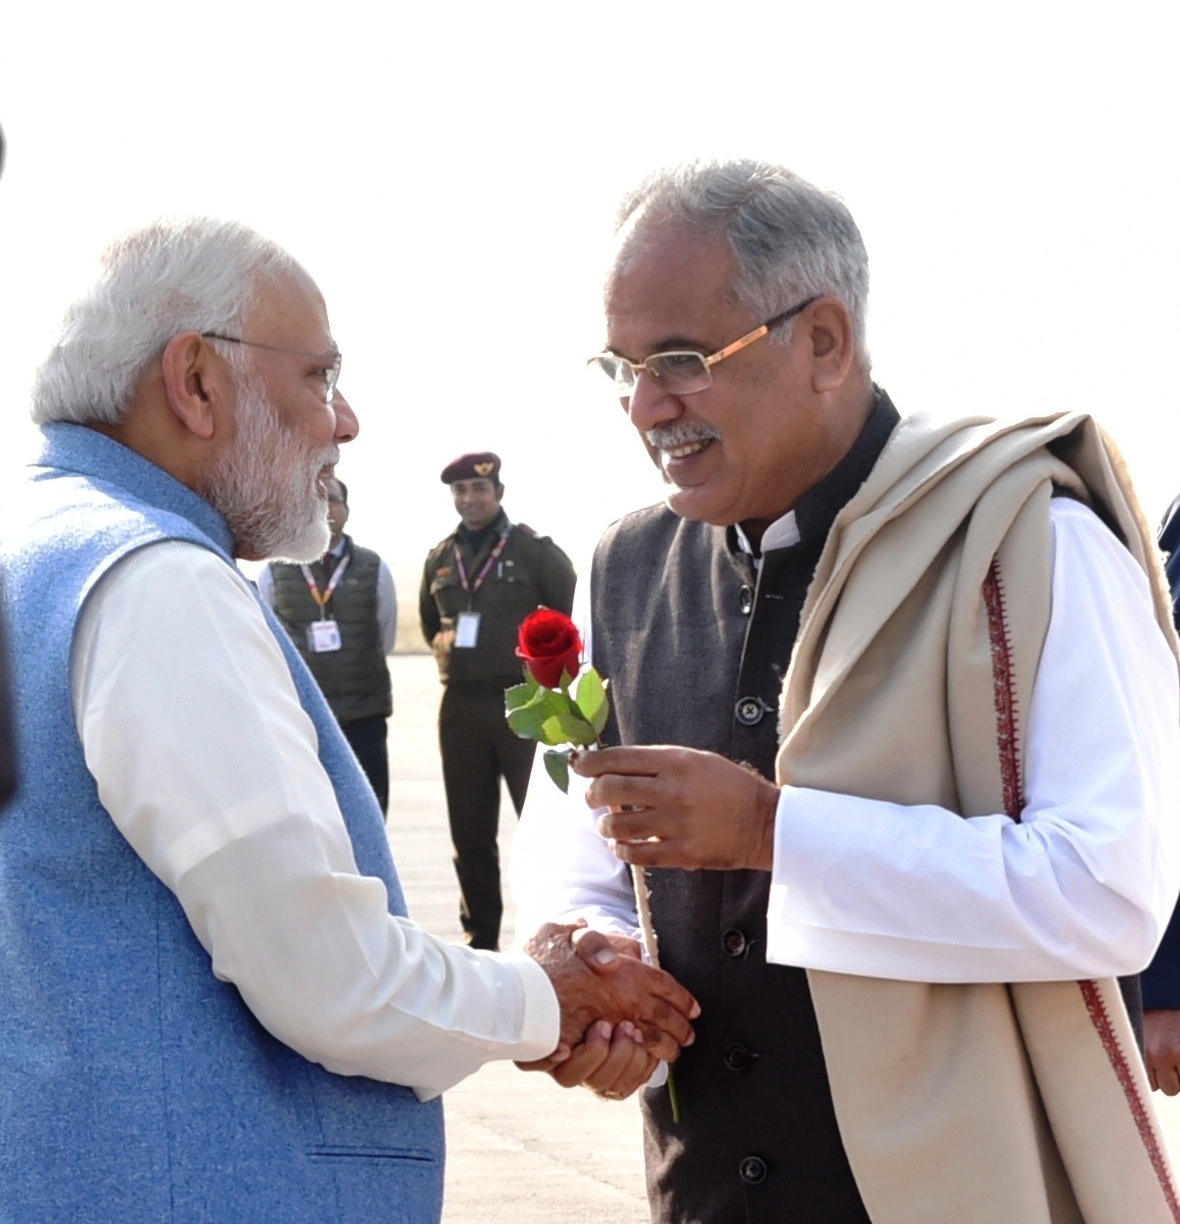 प्रधानमंत्री मोदी ने मुख्यमंत्री बघेल को दी बधाई, प्रधानमंत्री का विमानतल पर हुआ आत्मीय स्वागत